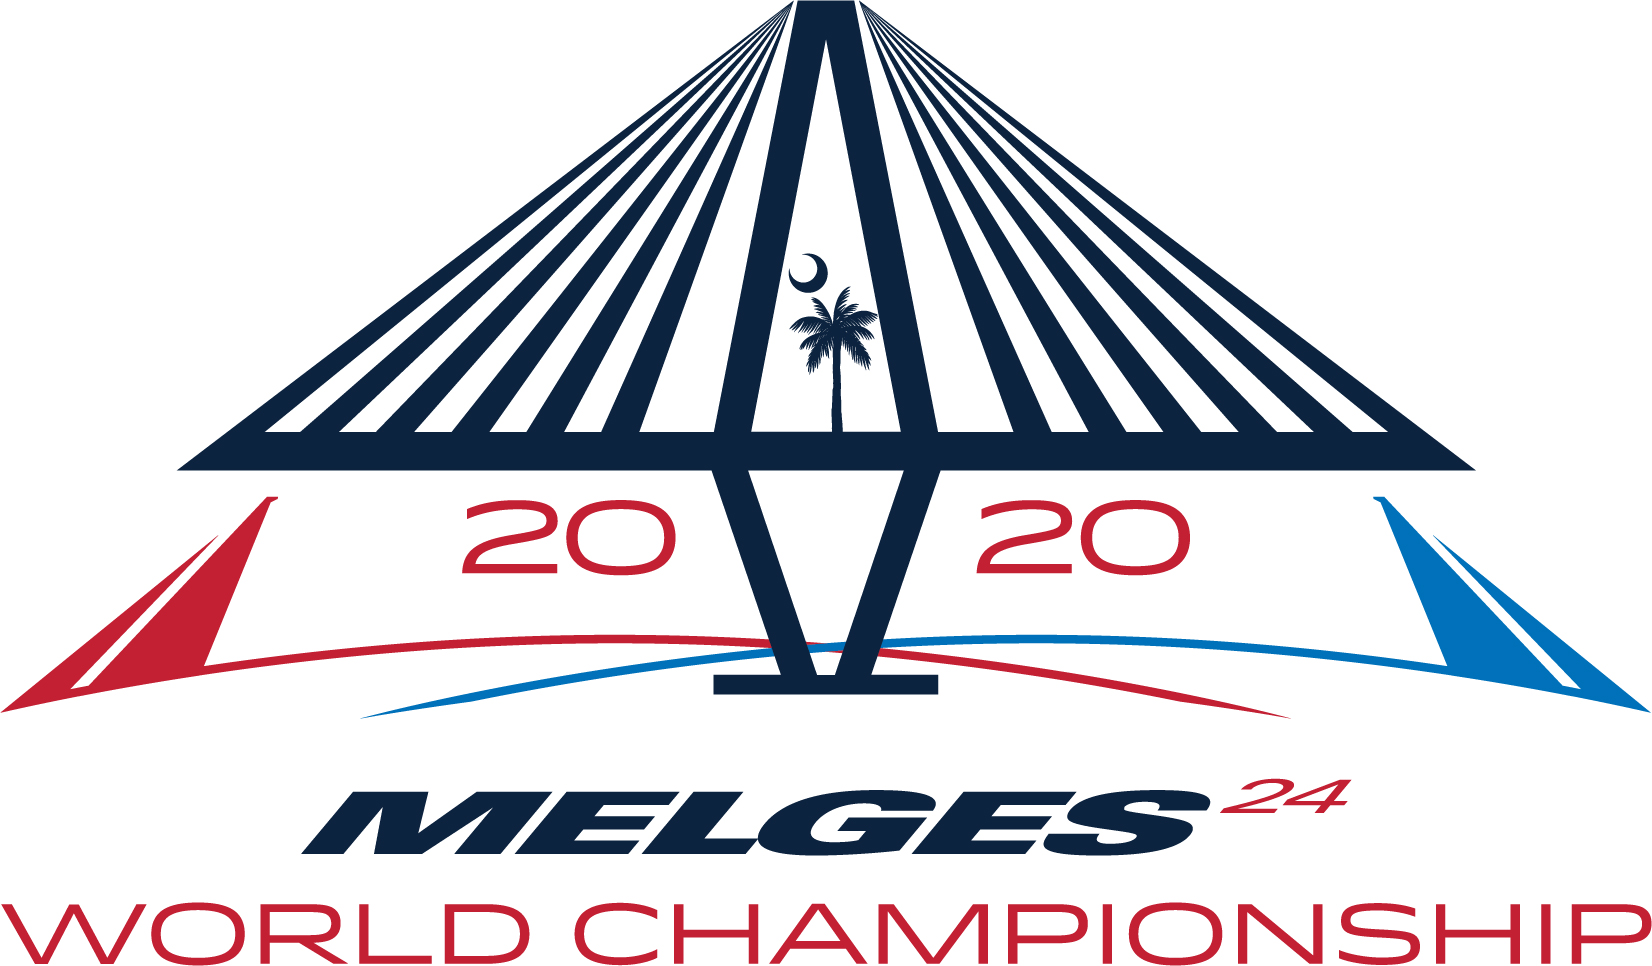 Melges 24 Worlds 2020 logo